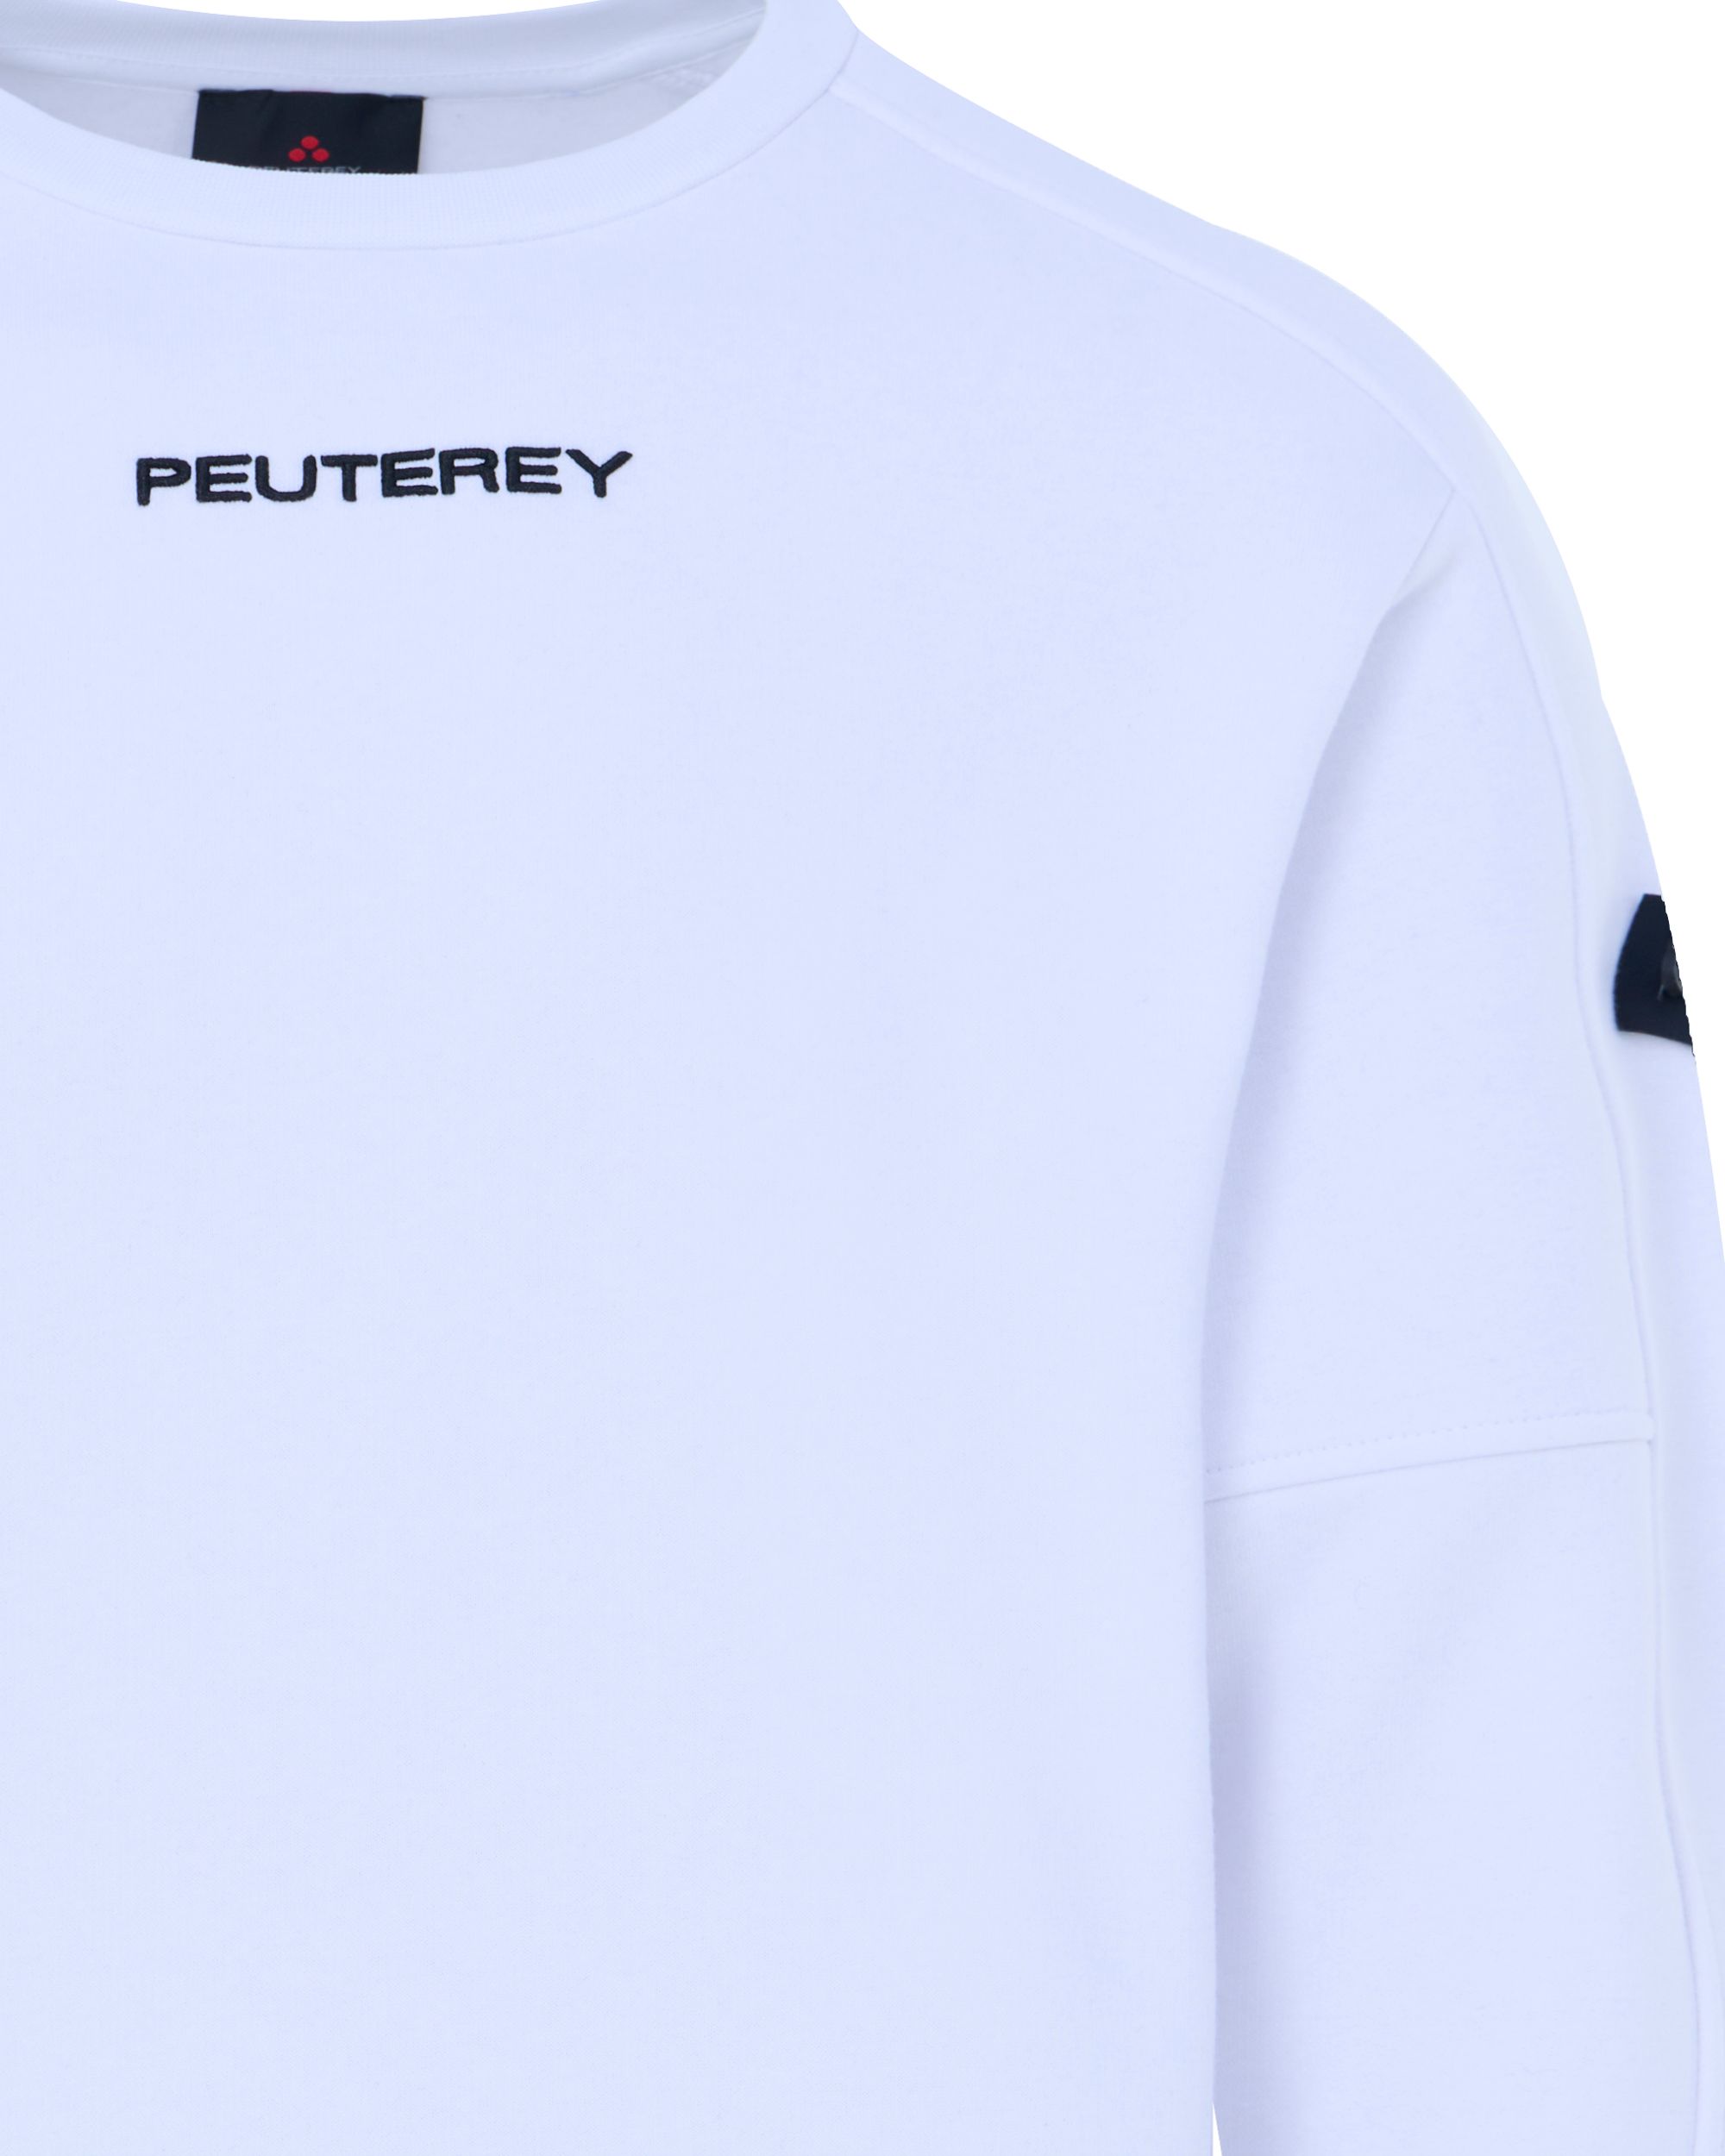 Peuterey Domak Sweater Off white 088210-001-L